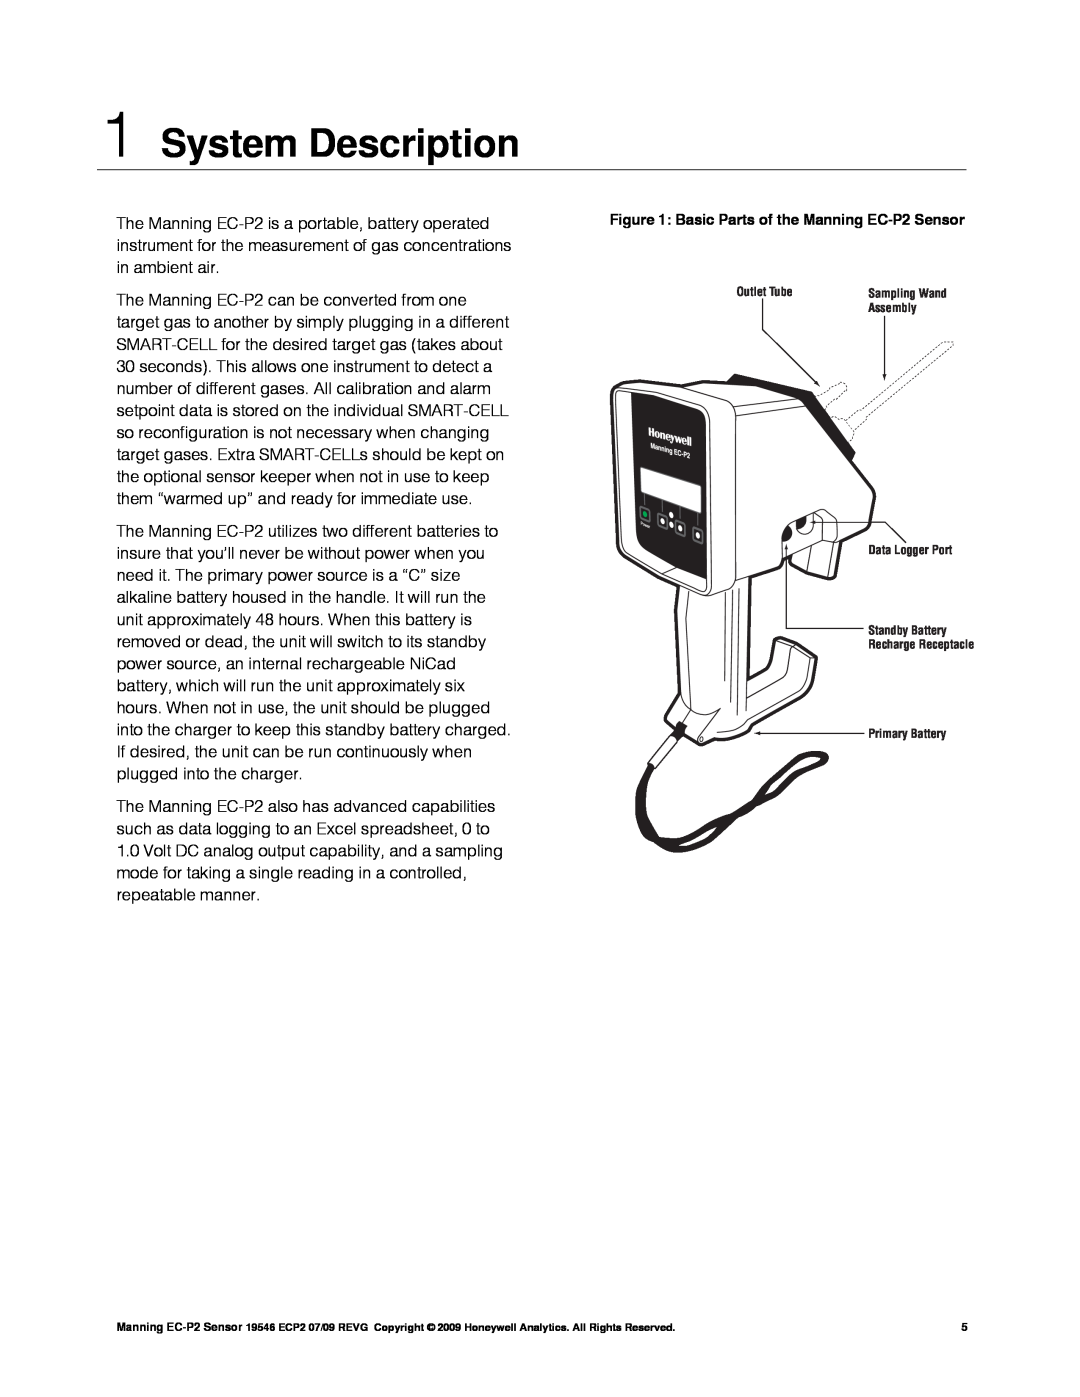 Honeywell installation manual System Description, Basic Parts of the Manning EC-P2Sensor 